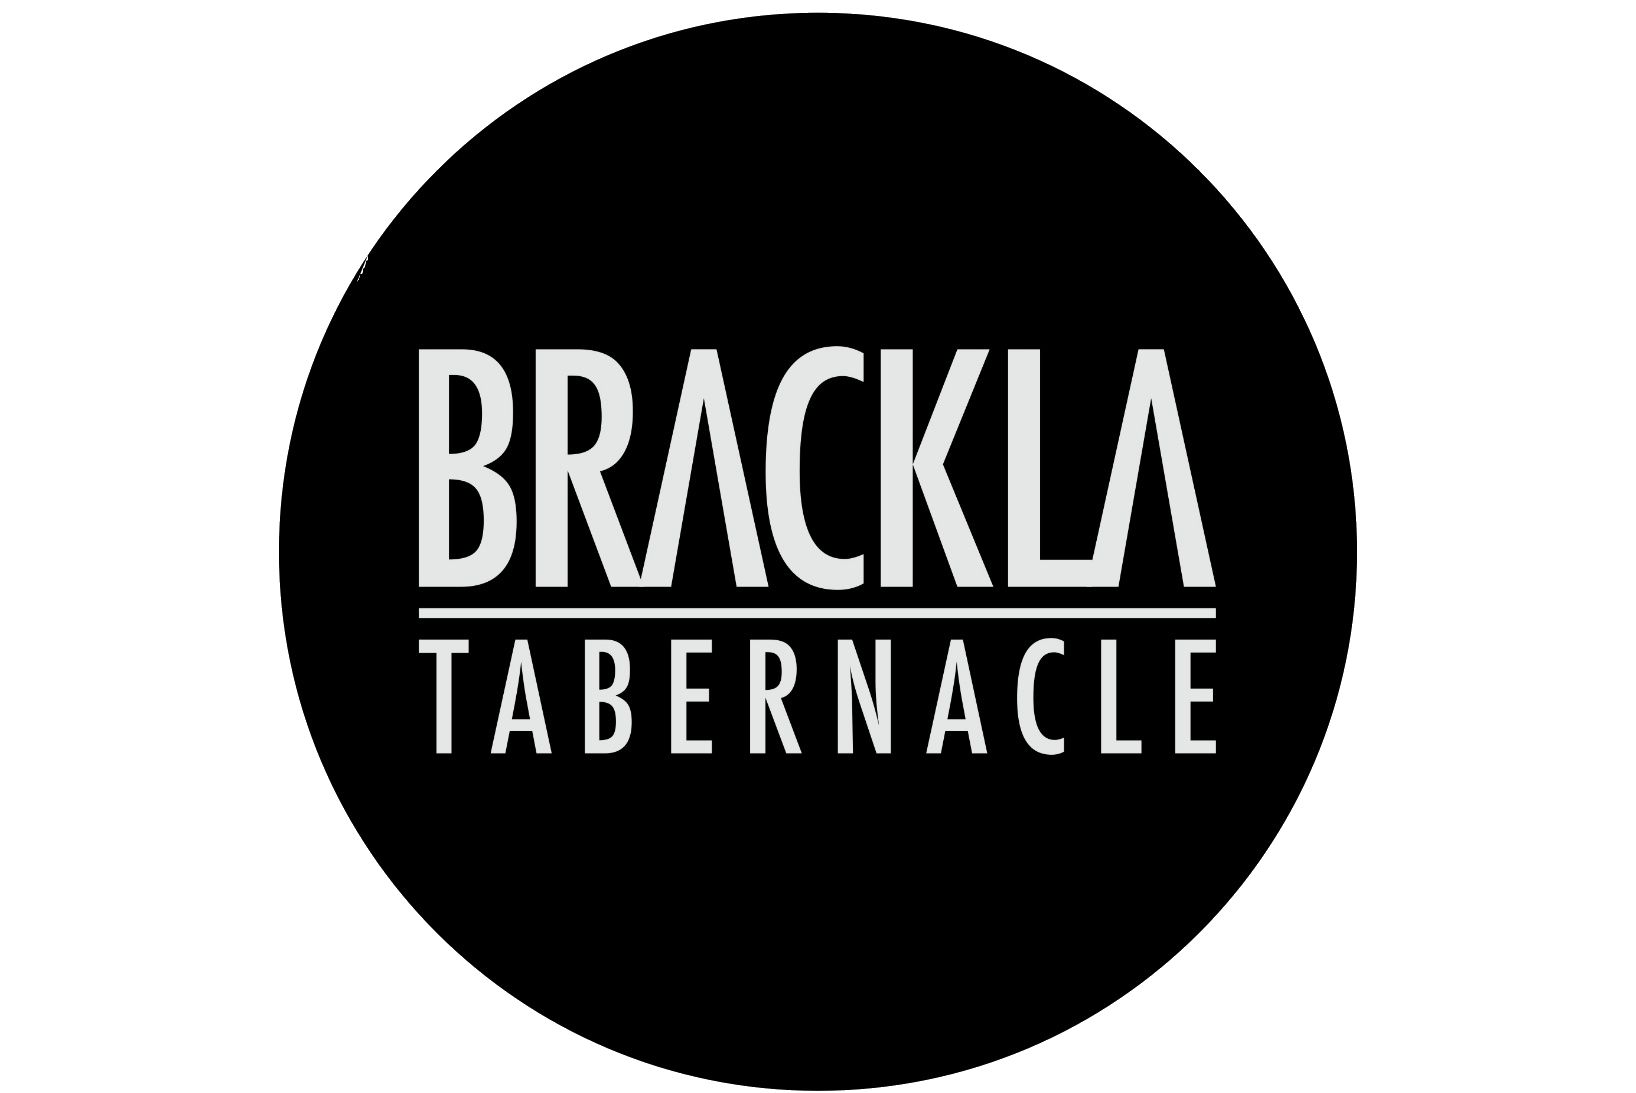 Brackla Tabernacle